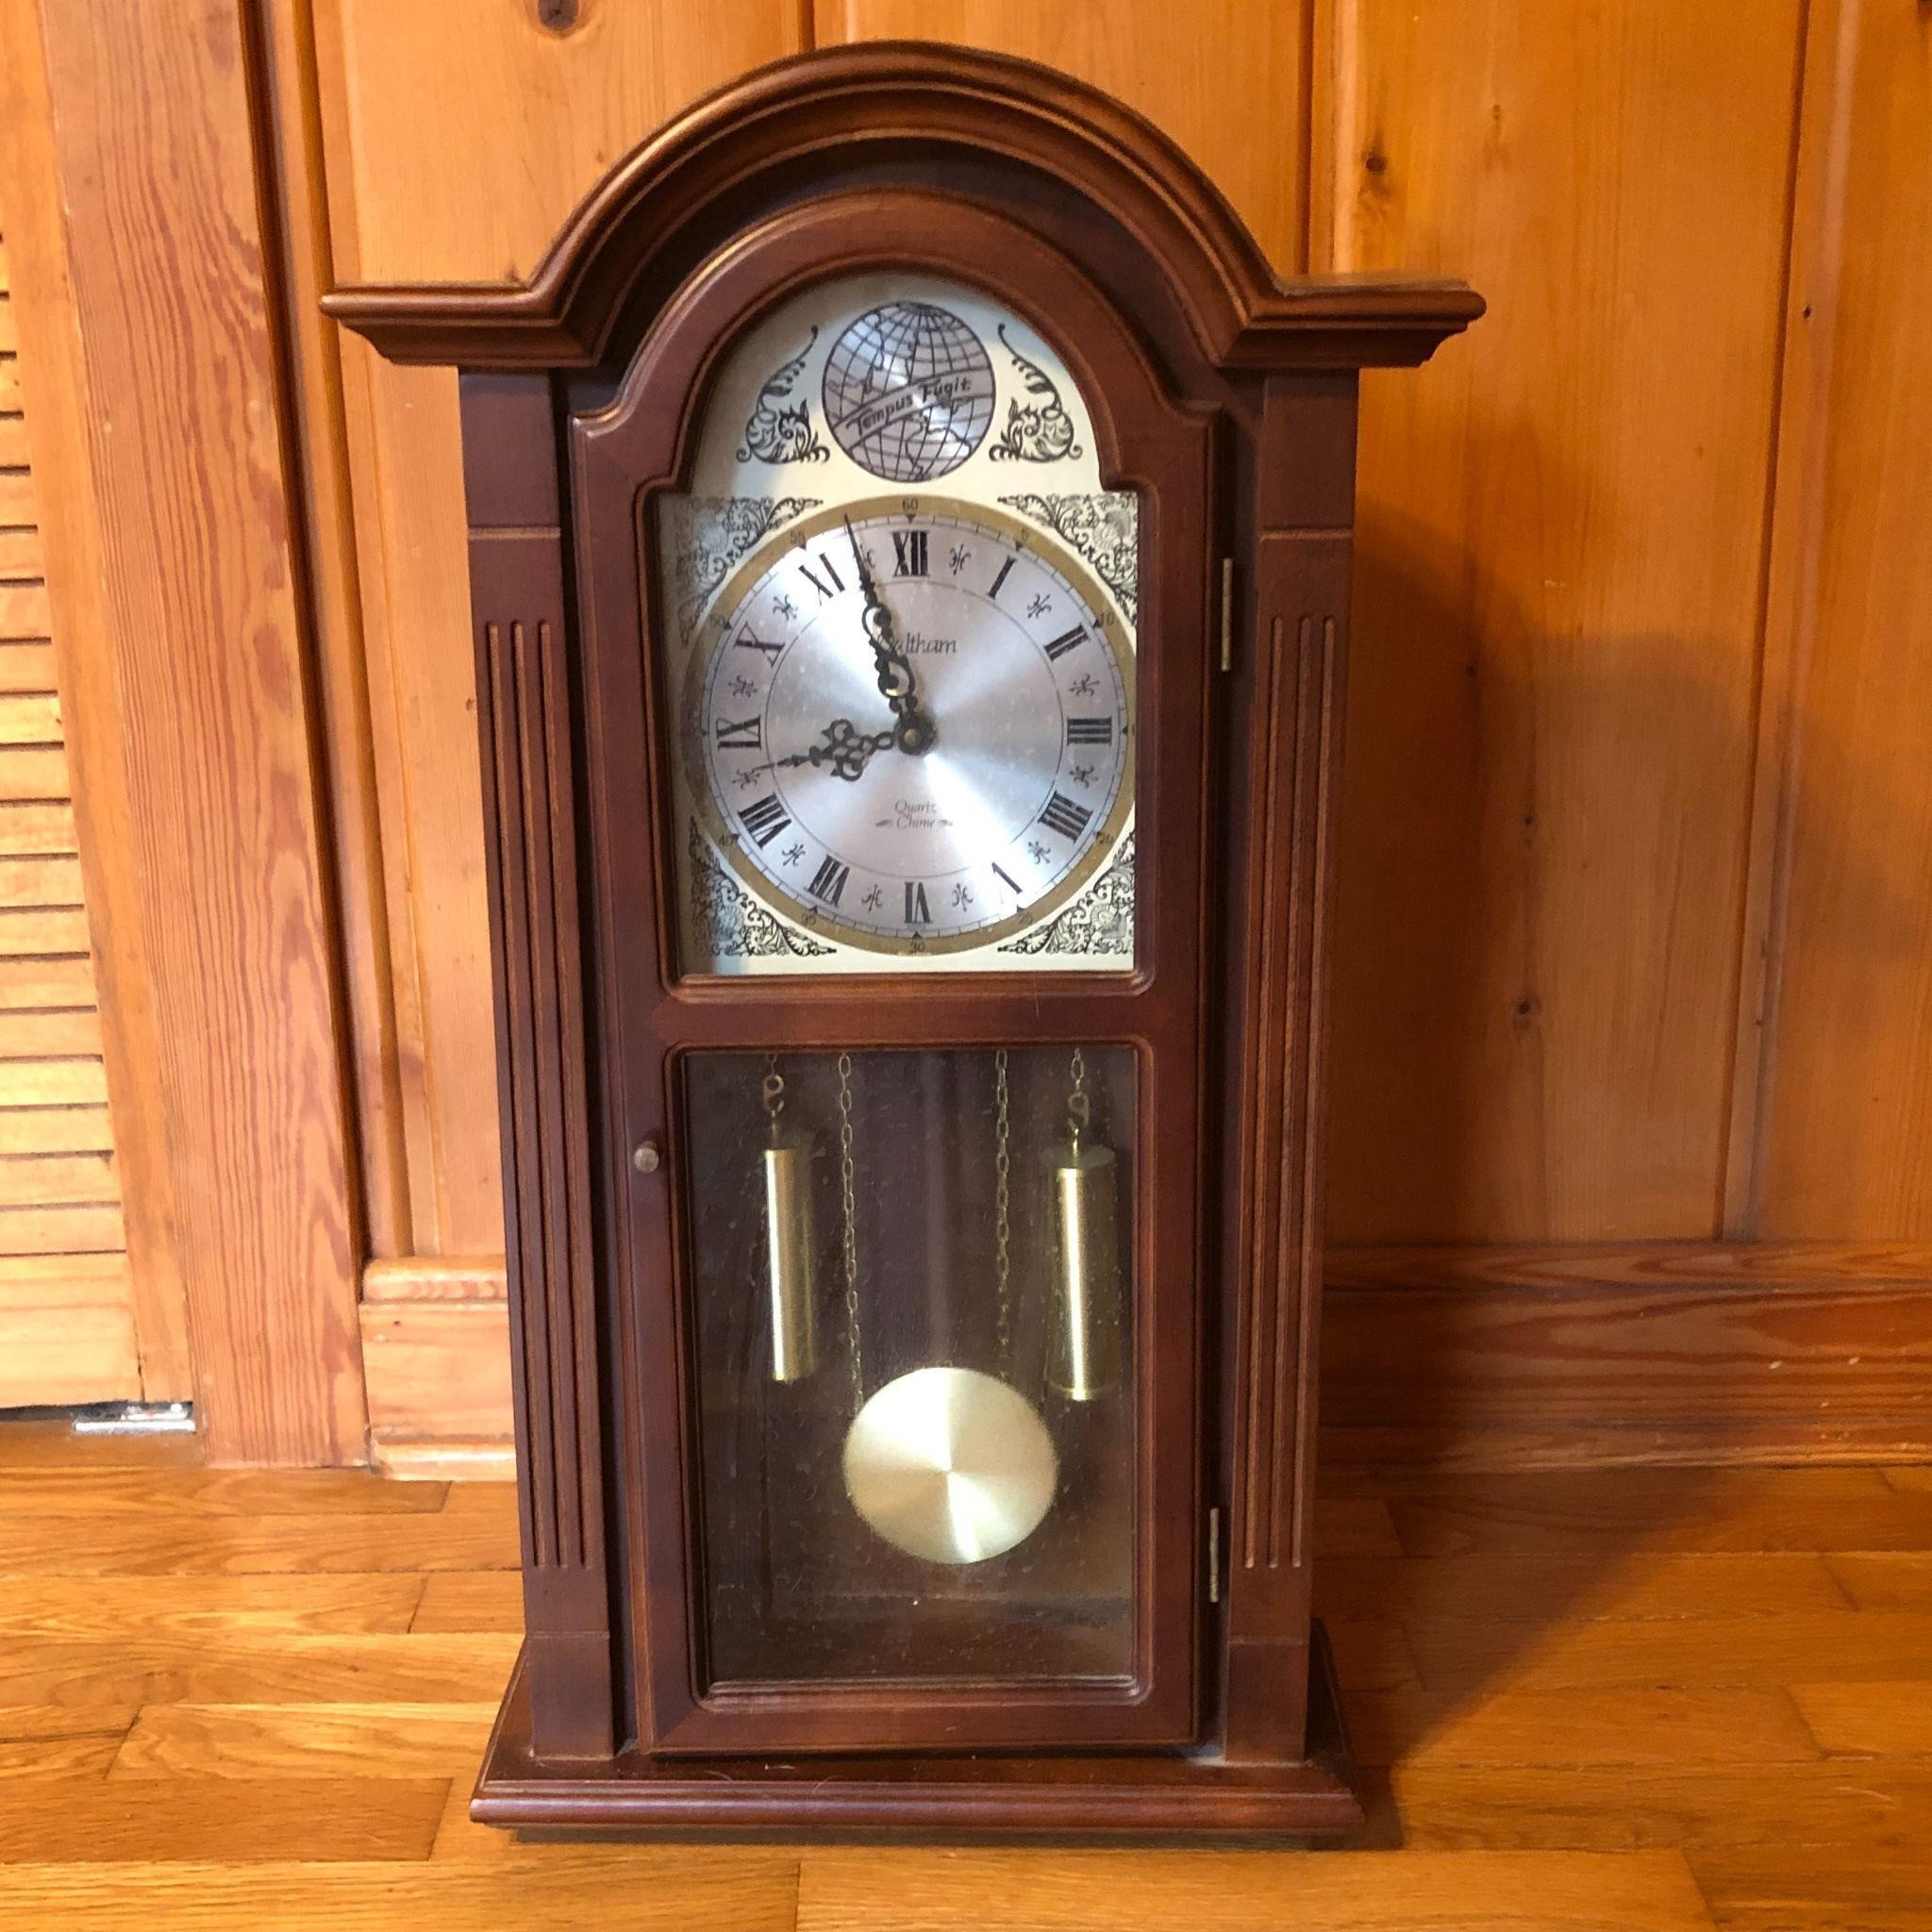 Waltham Quartz Chime Clock in Wood Cabinet